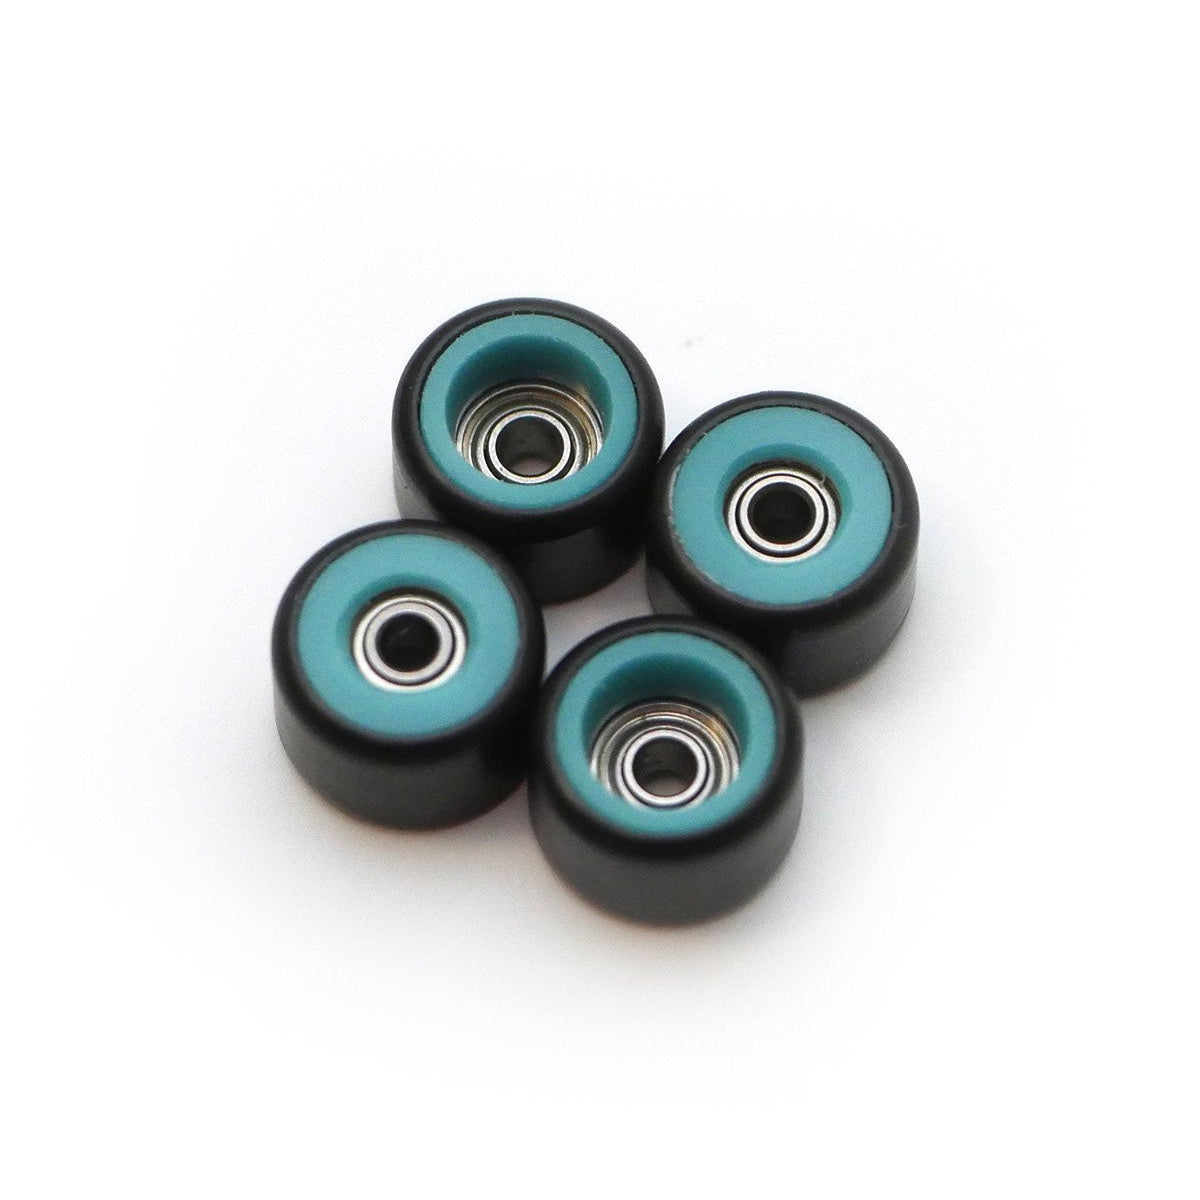 FlatFace Wheels - Dual Durometer Turquoise/Black